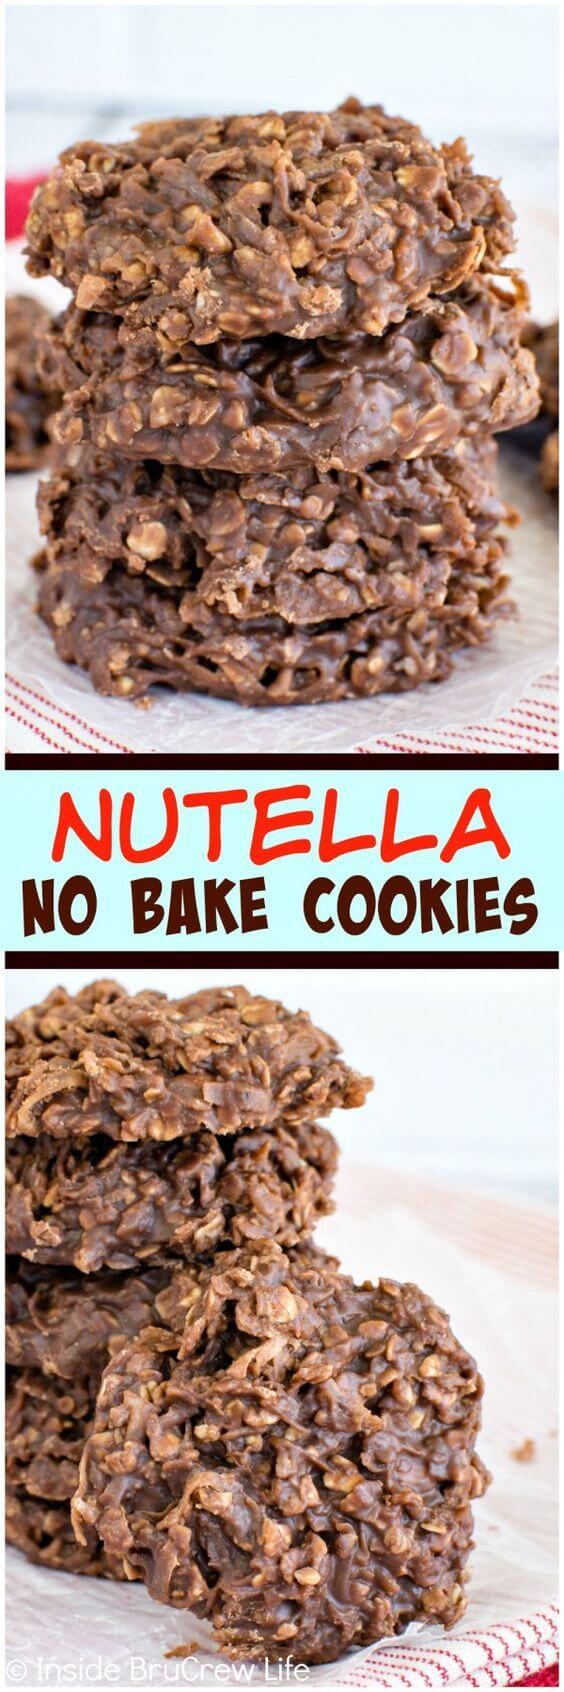 15 Nutella no bake cookies